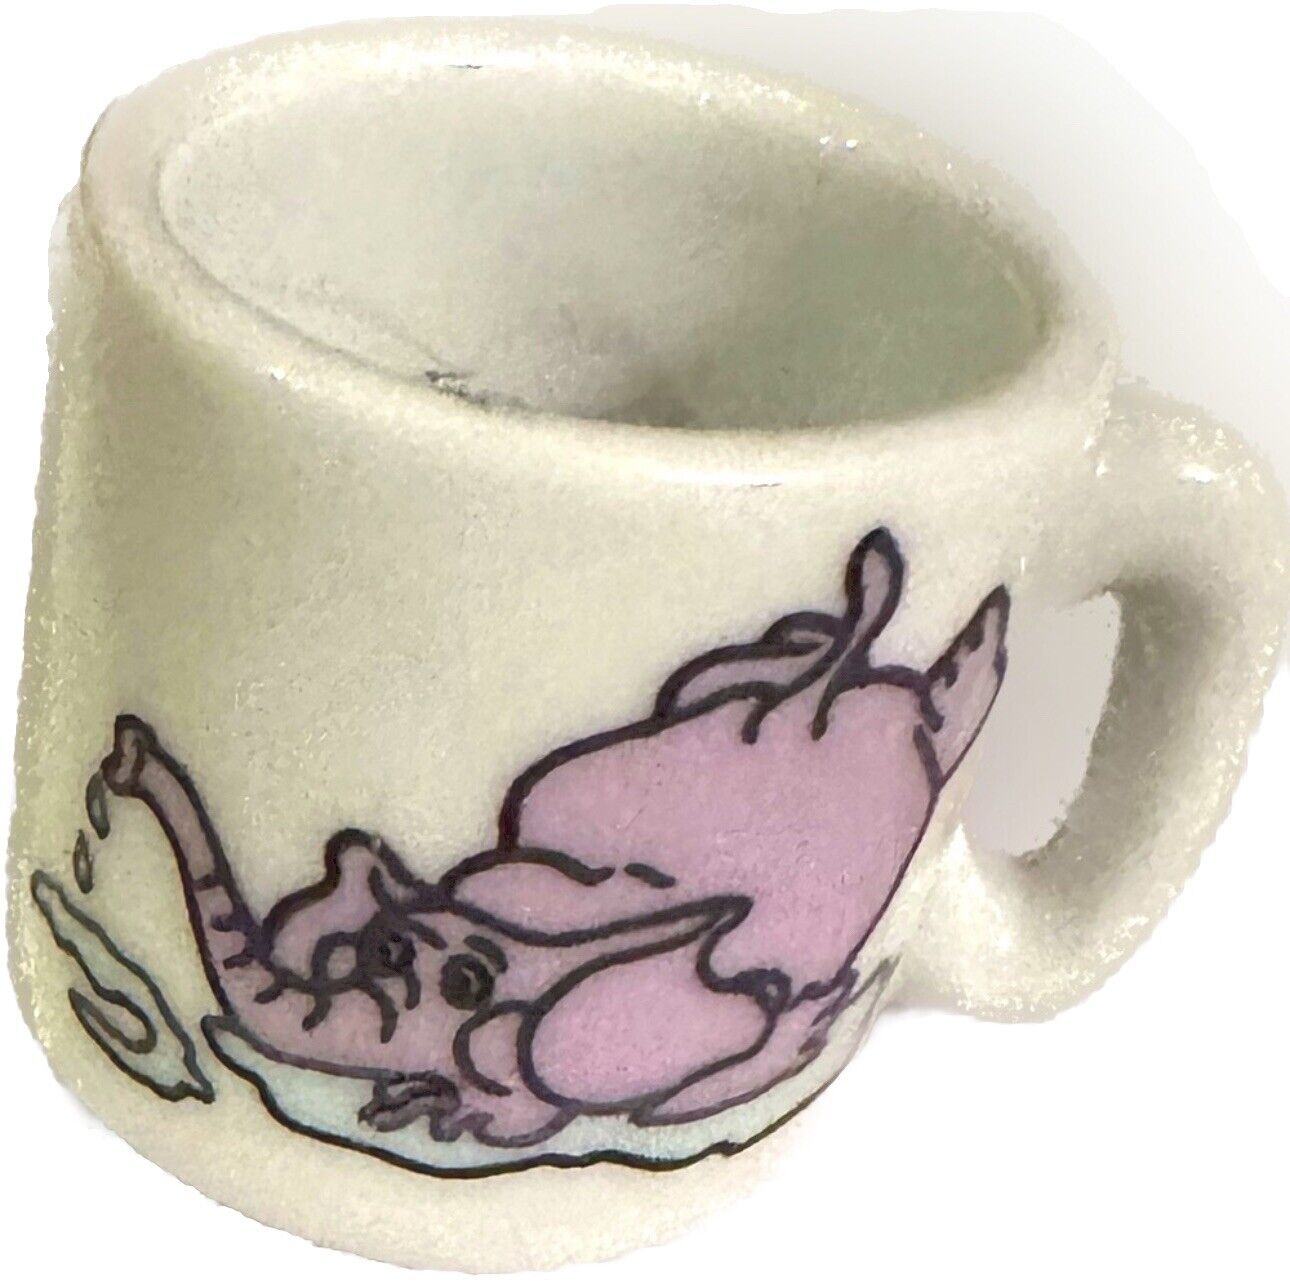 VTG 1980s  PINK PURPLE TINY CERAMIC ELEPHANT CUP MUG COFFEE TEA PARTY TOY 1.5”x1